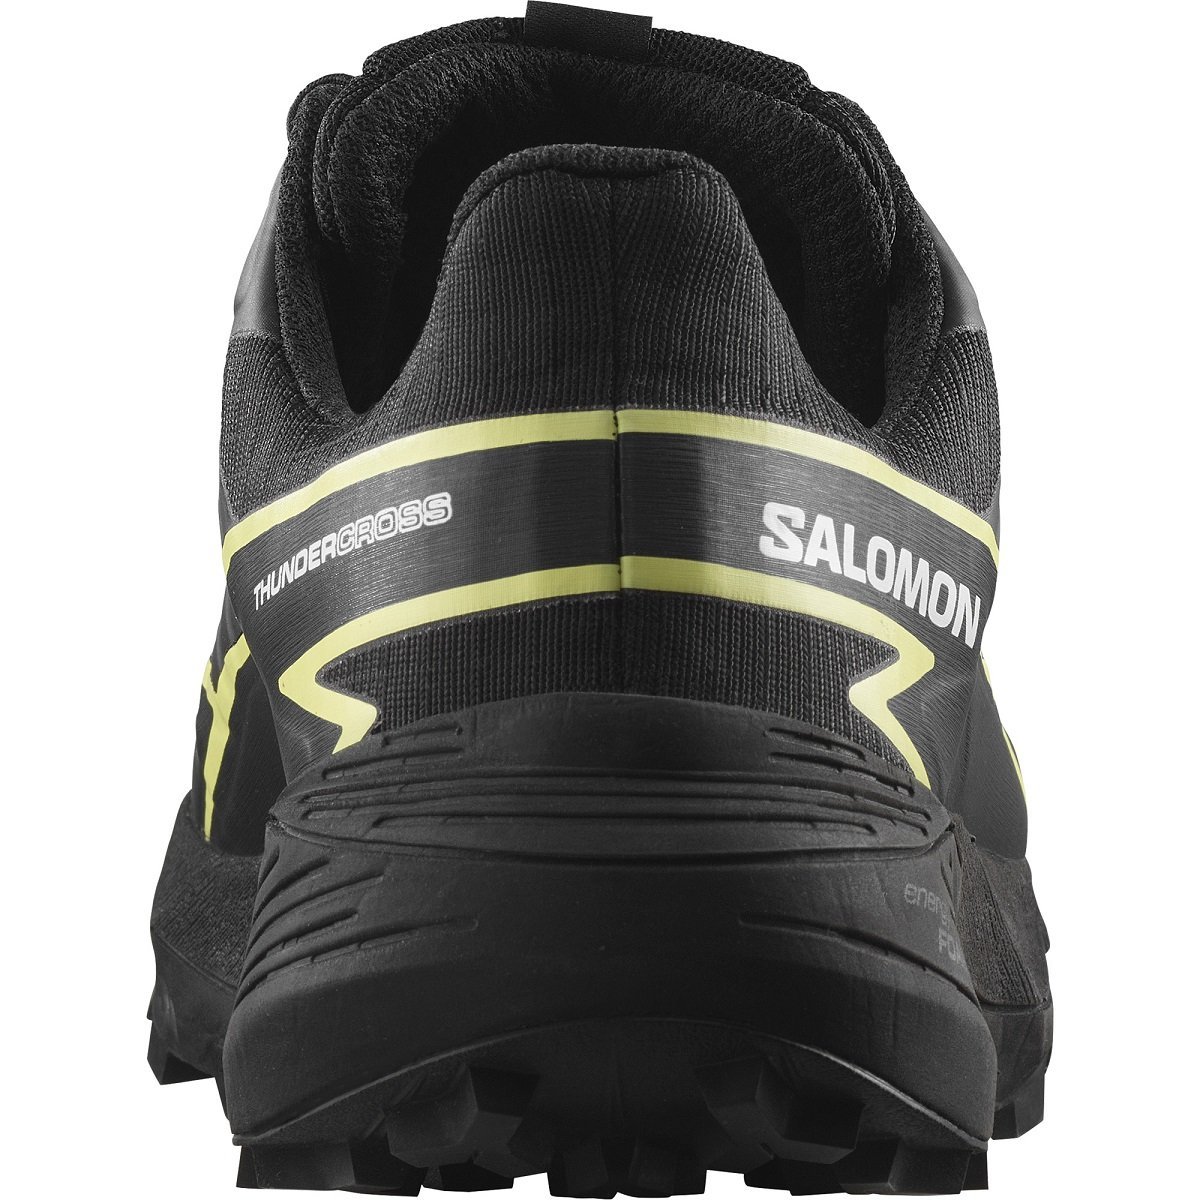 Obuv Salomon Thundercross GTX W - čierna